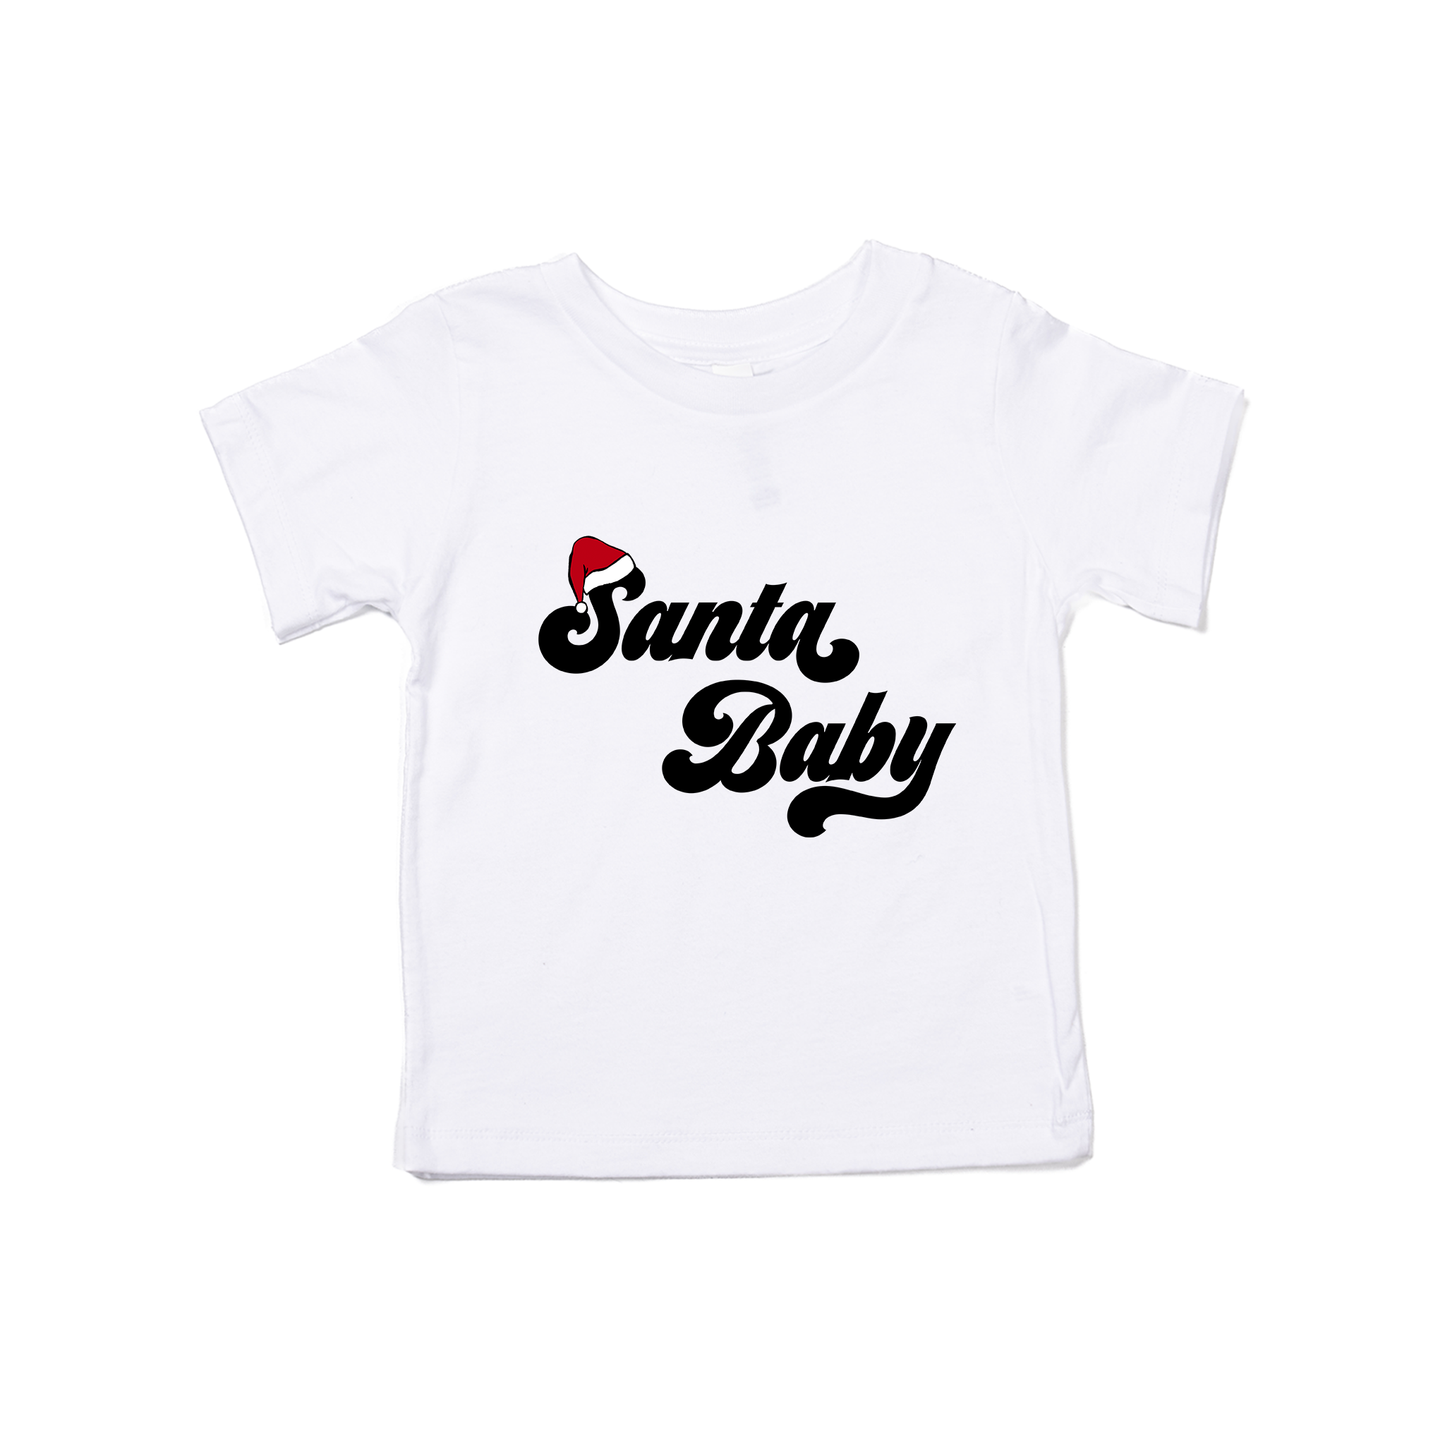 Santa Baby - Kids Tee (White)